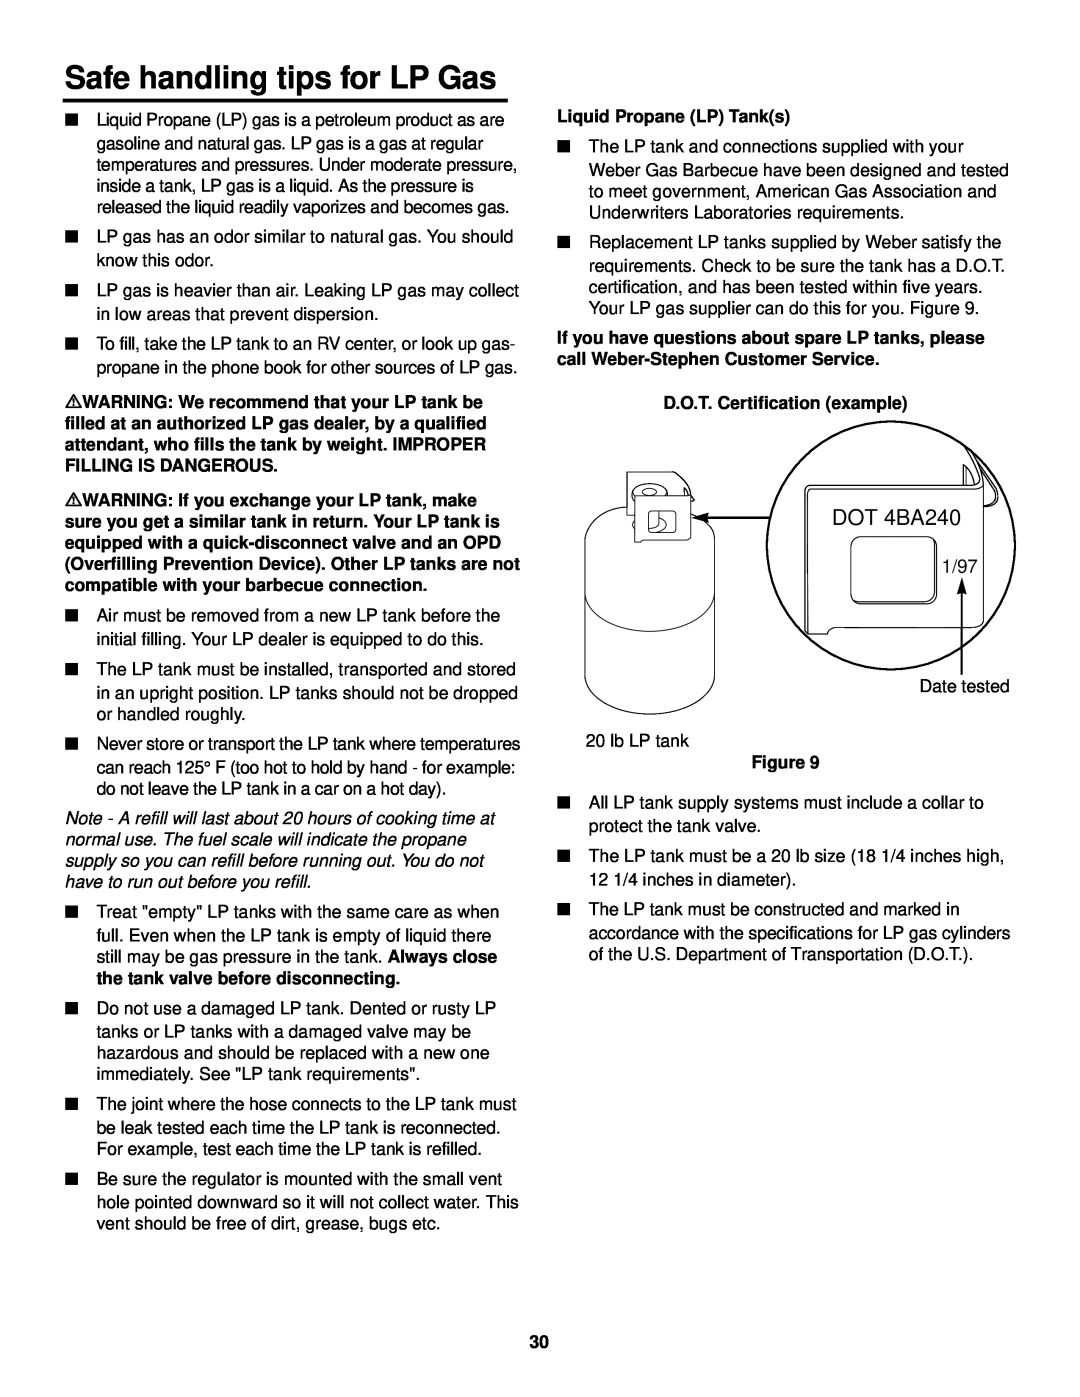 Weber 98642 owner manual Safe handling tips for LP Gas, 1/97, Liquid Propane LP Tanks, D.O.T. Certification example 